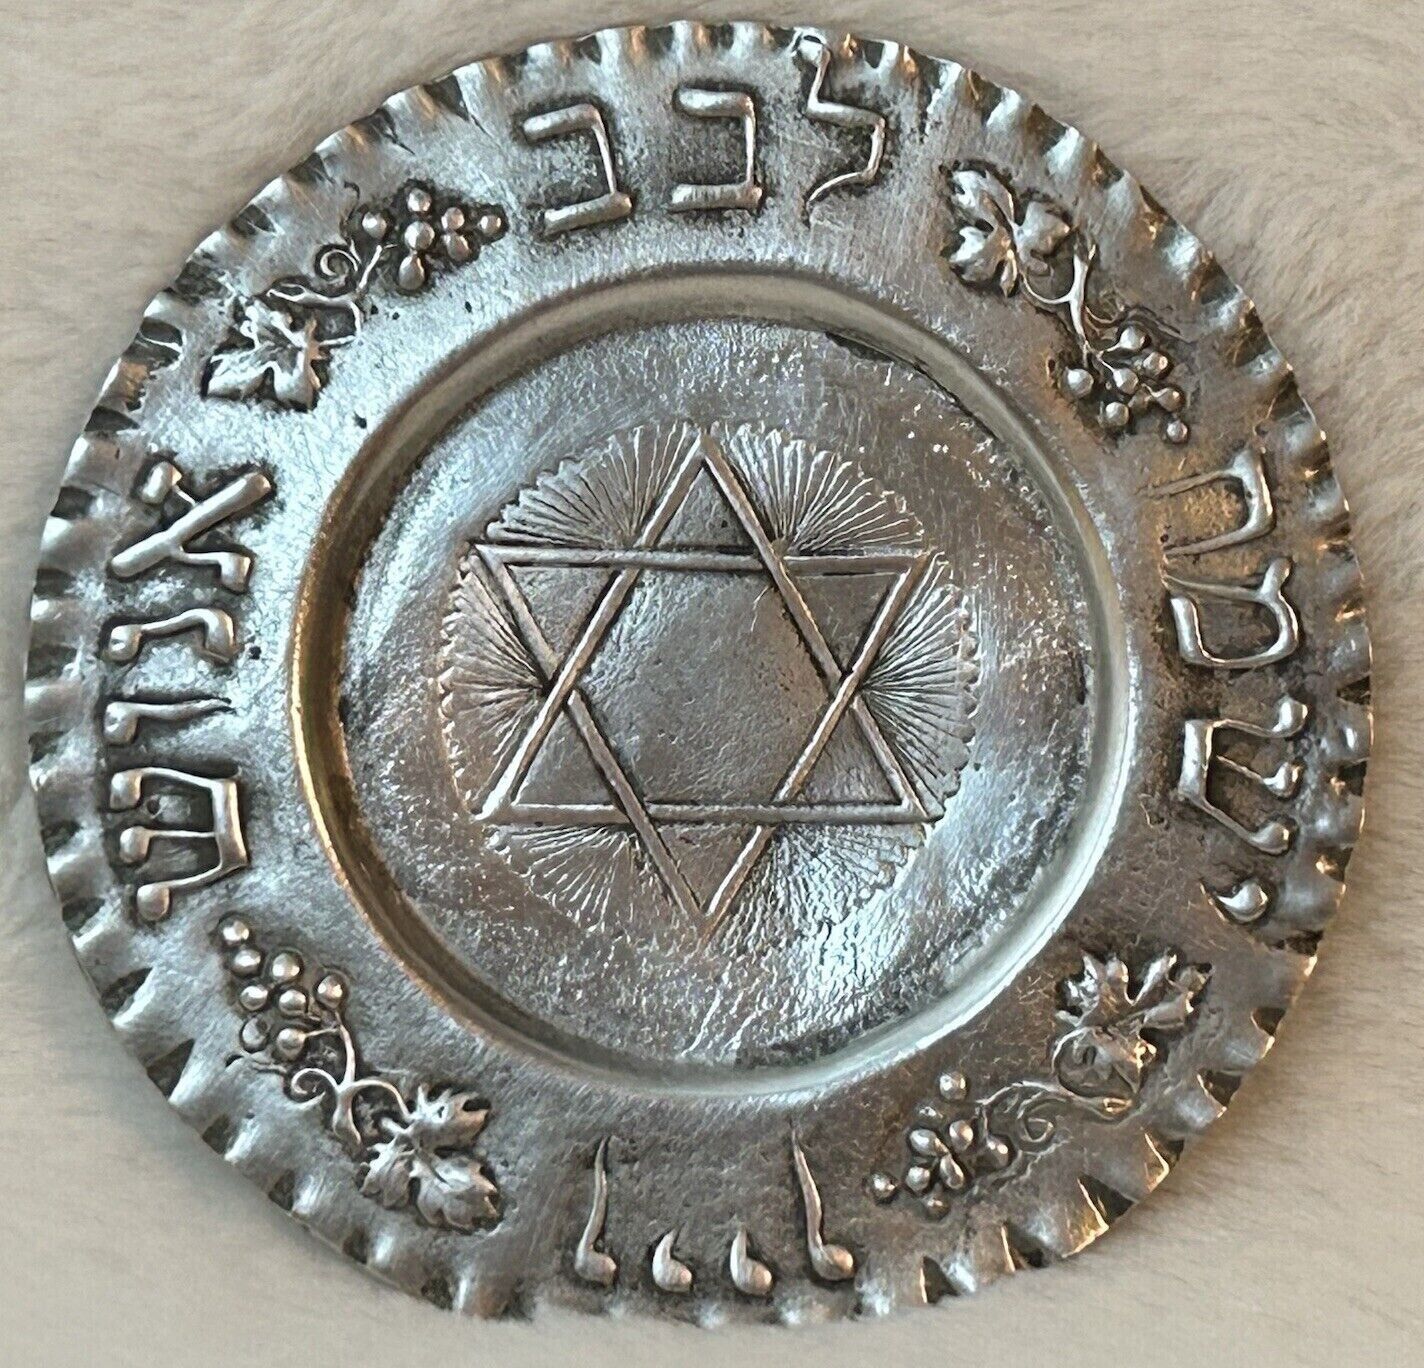 Antique 4” Handmade Silver Jewish Star Kiddush Plate For Havdalah saucer JUDAICA